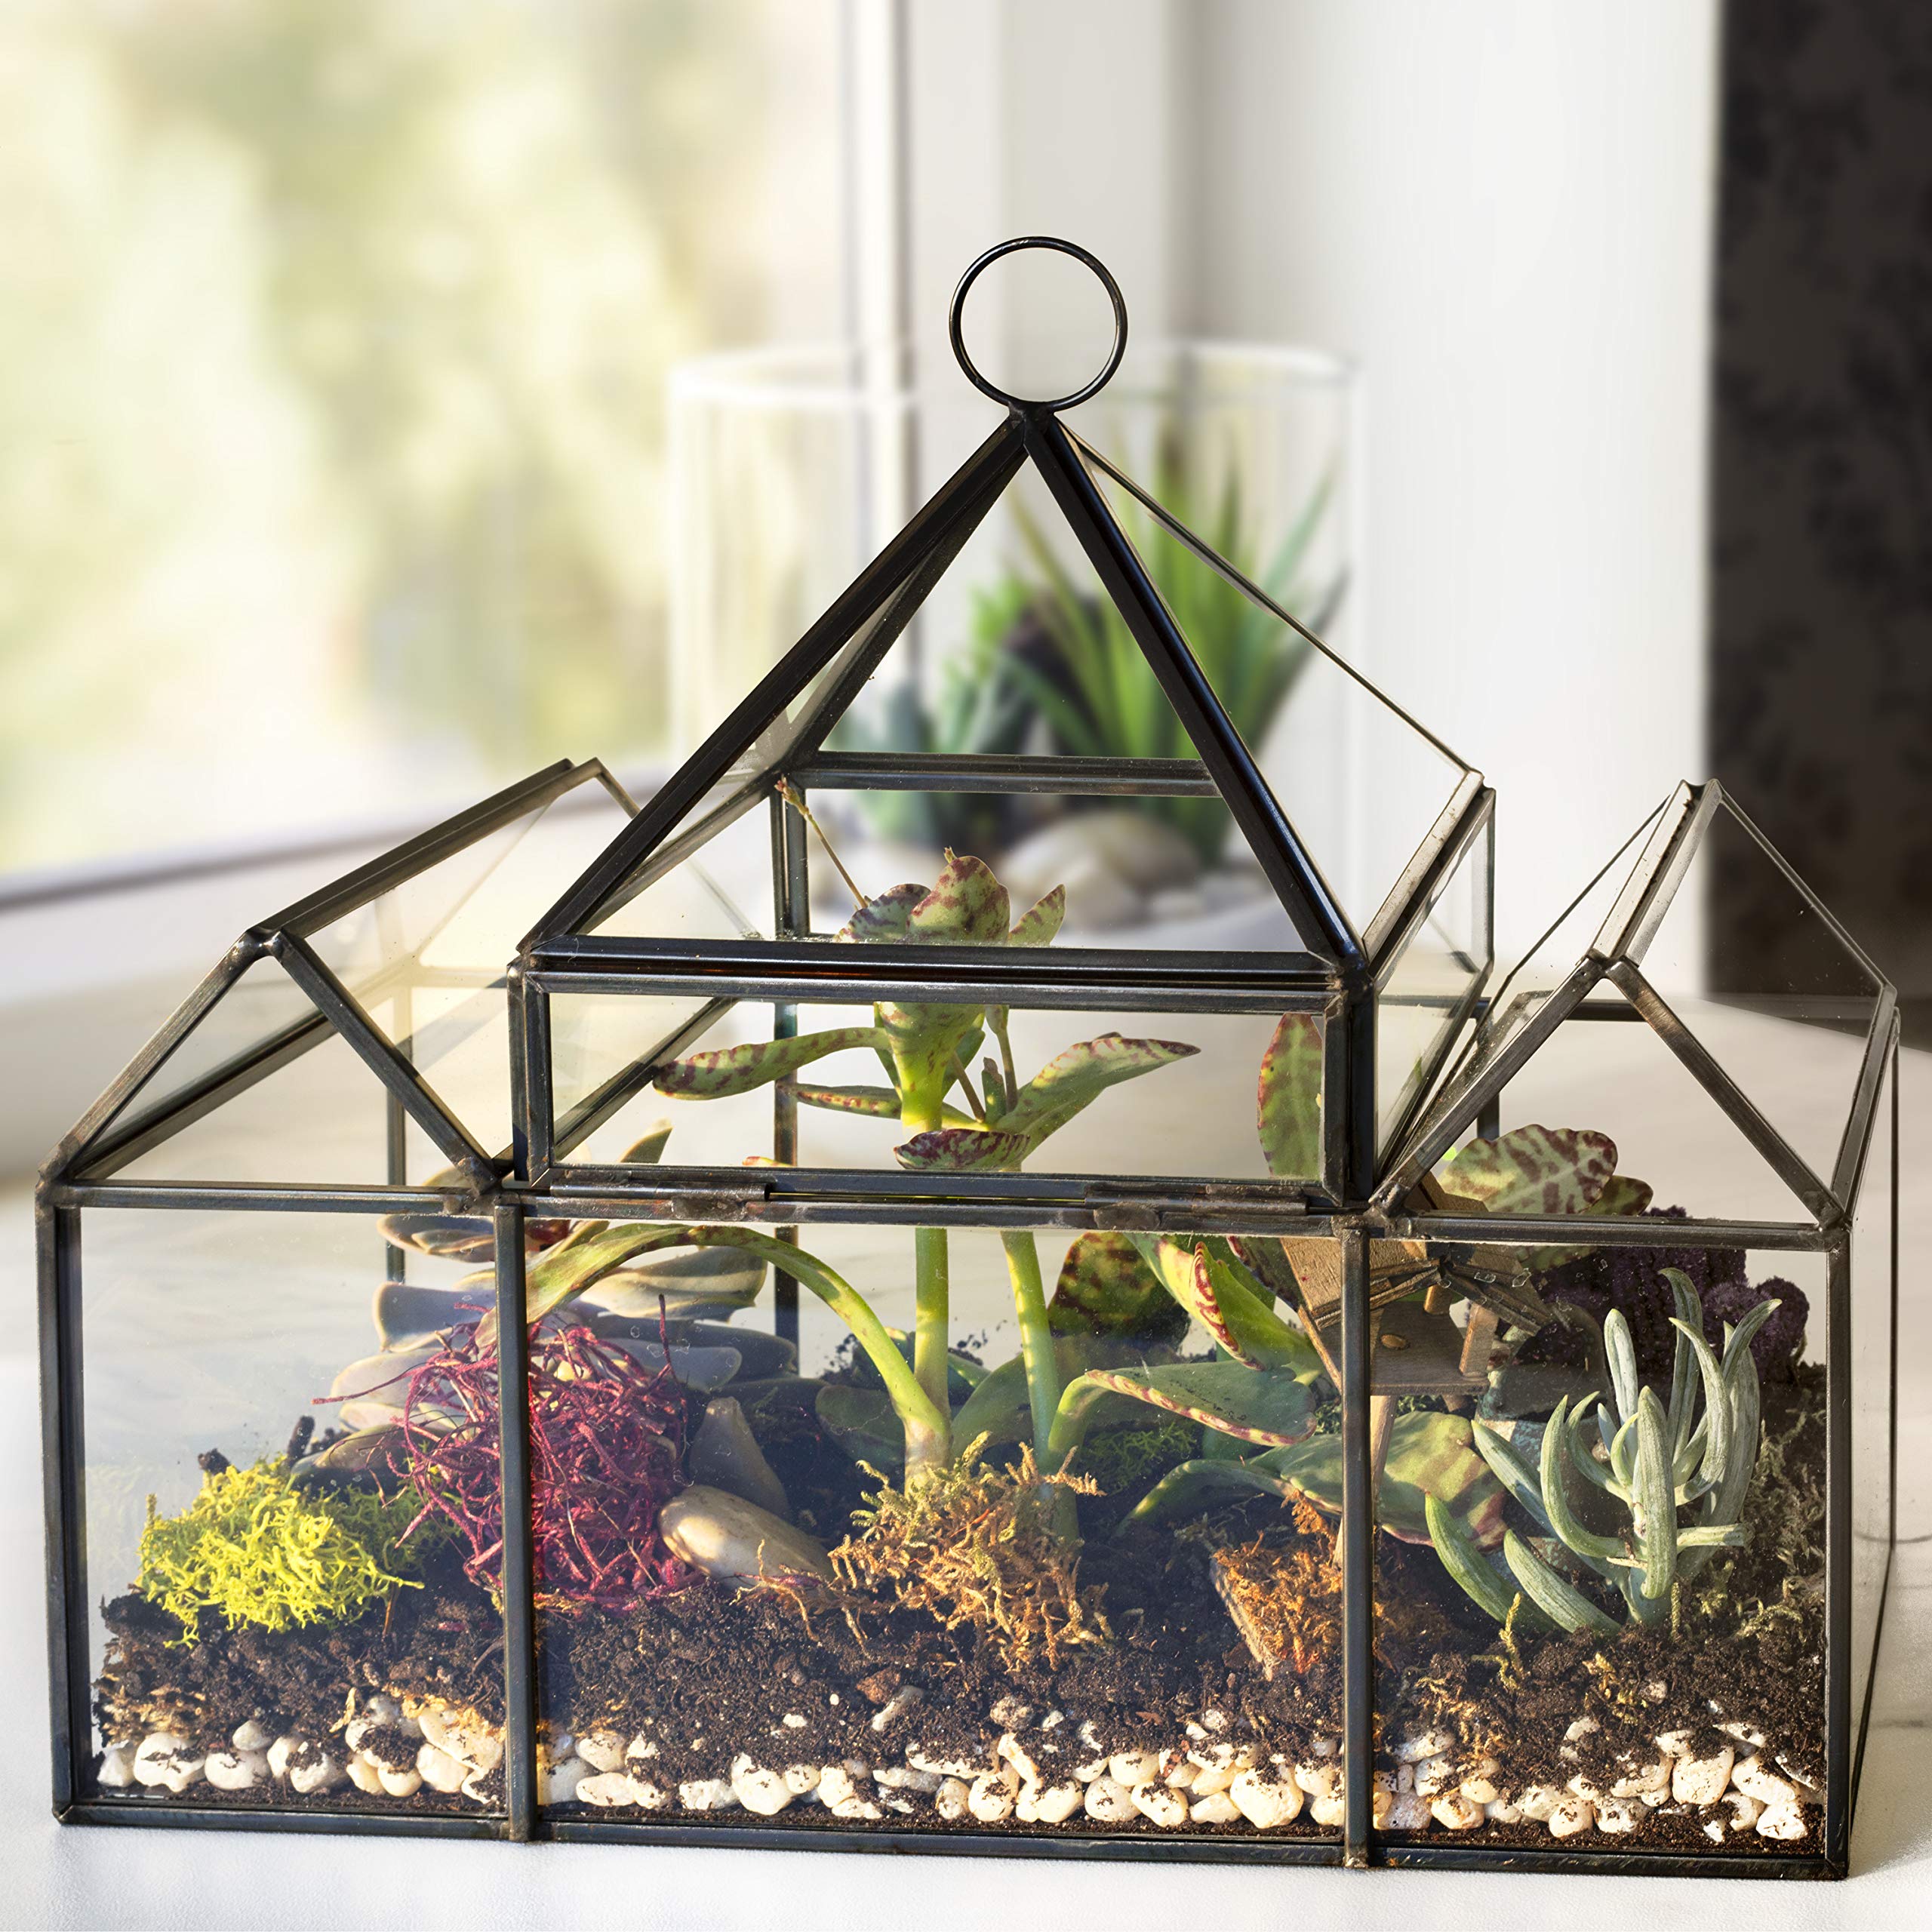 D'Eco Glass Castle Plant Terrarium (10x4.5x9) - Indoor Tabletop & Hanging Black Geometric Planter - Succulents, Air Plants, Moss, Fern - Home Garden Office Decor - Holiday (No Plants)